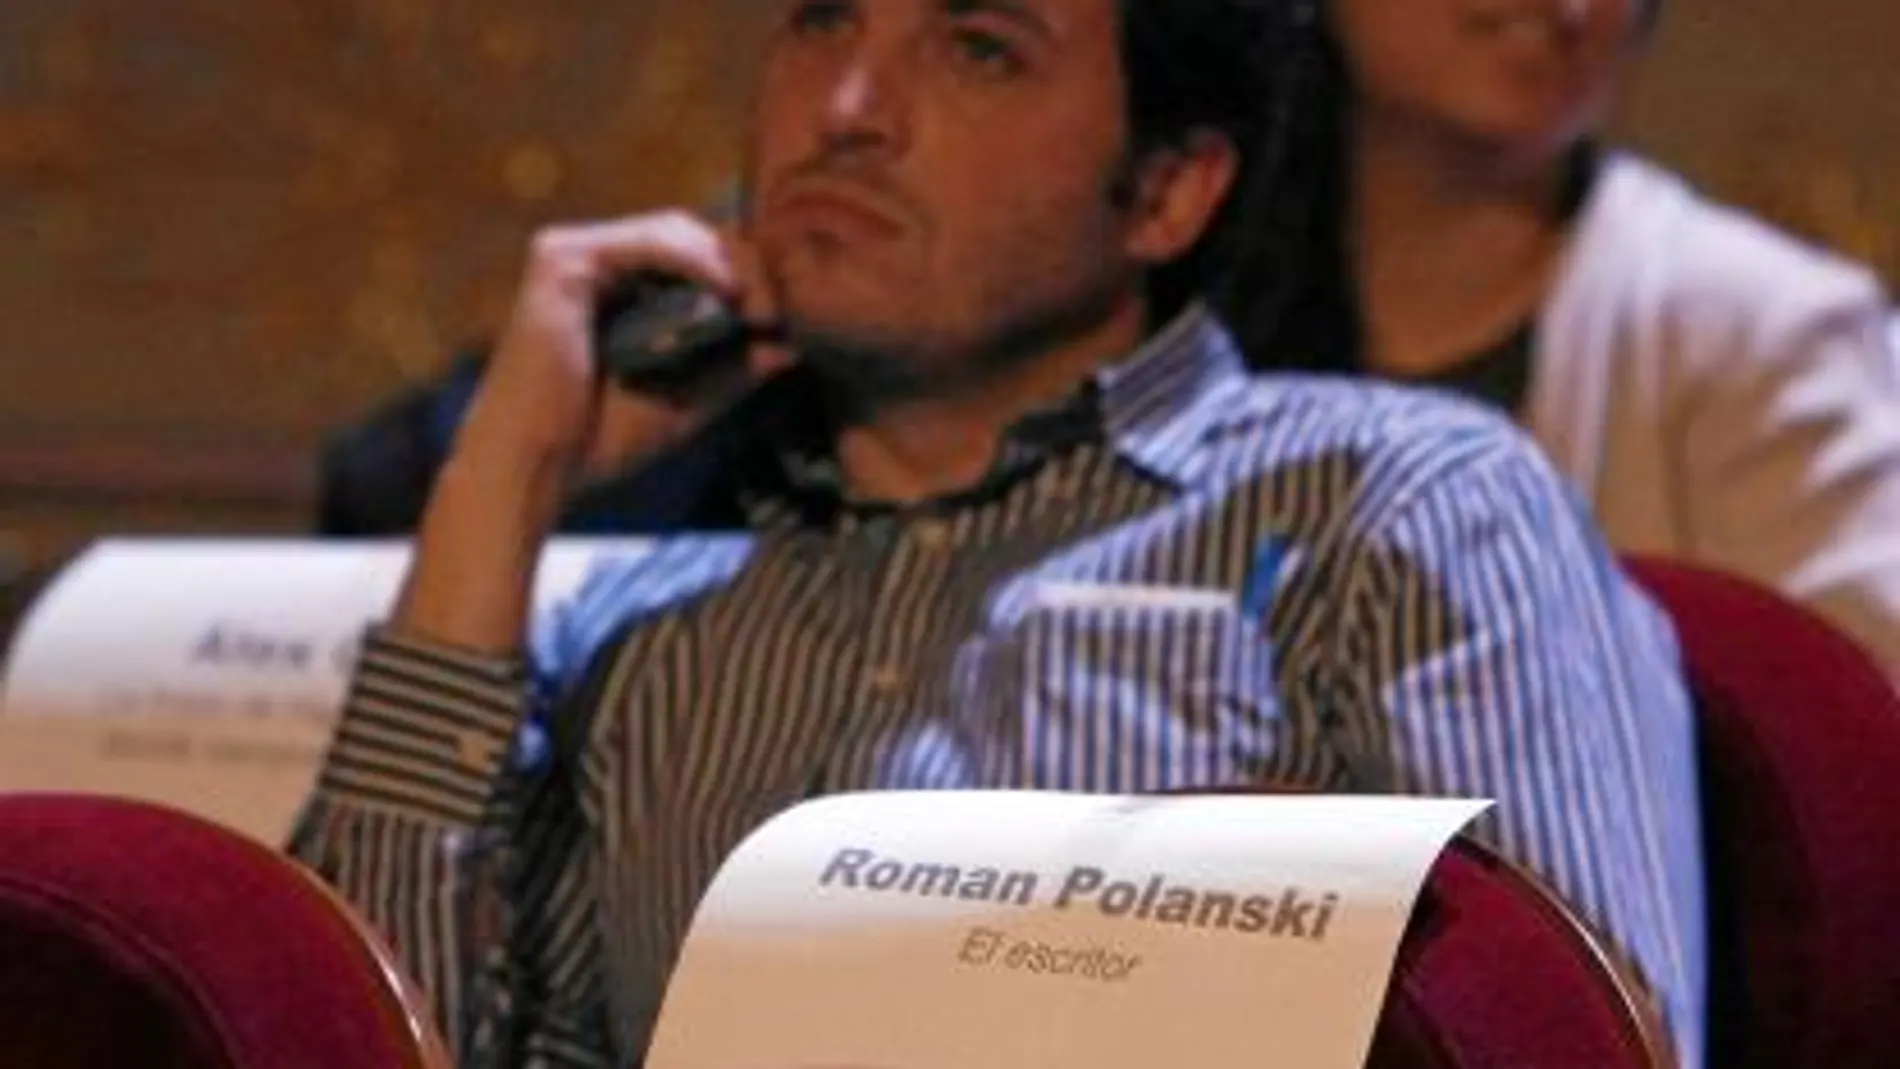 Butaca con el nombre de Roman Polanski